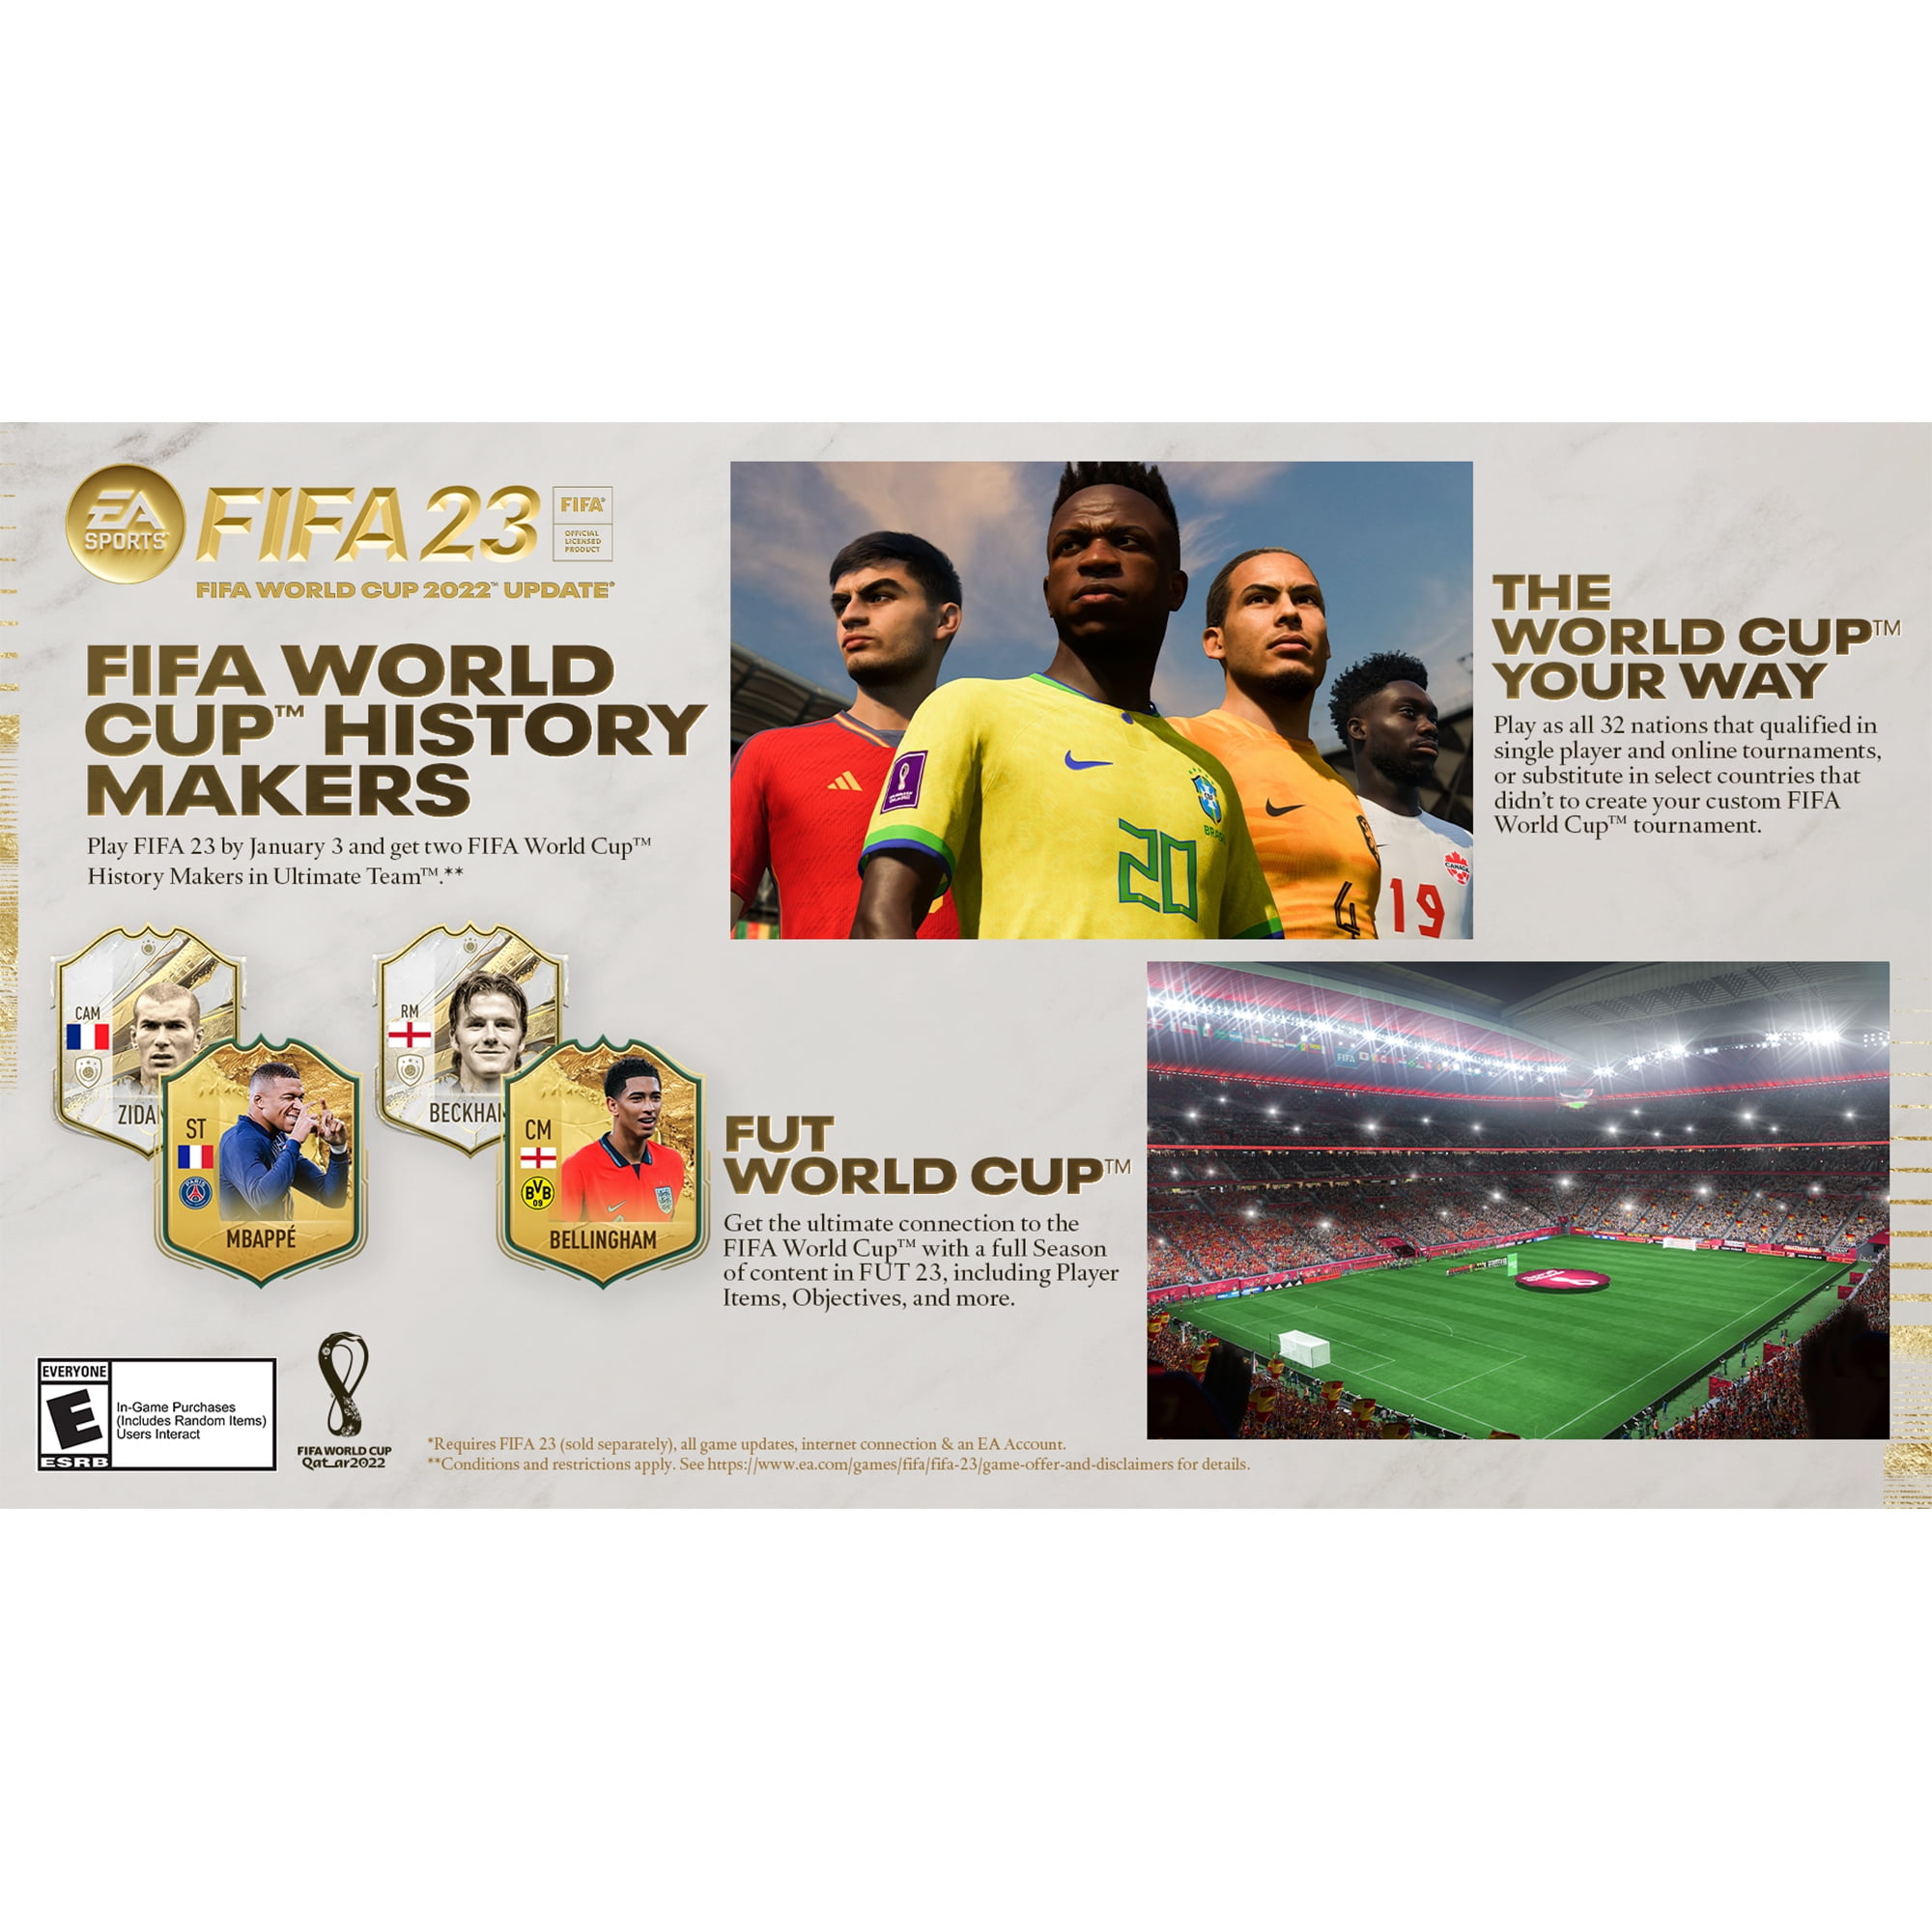 PLAYSTATION 4 DVD FIFA 23 PS4 GAME